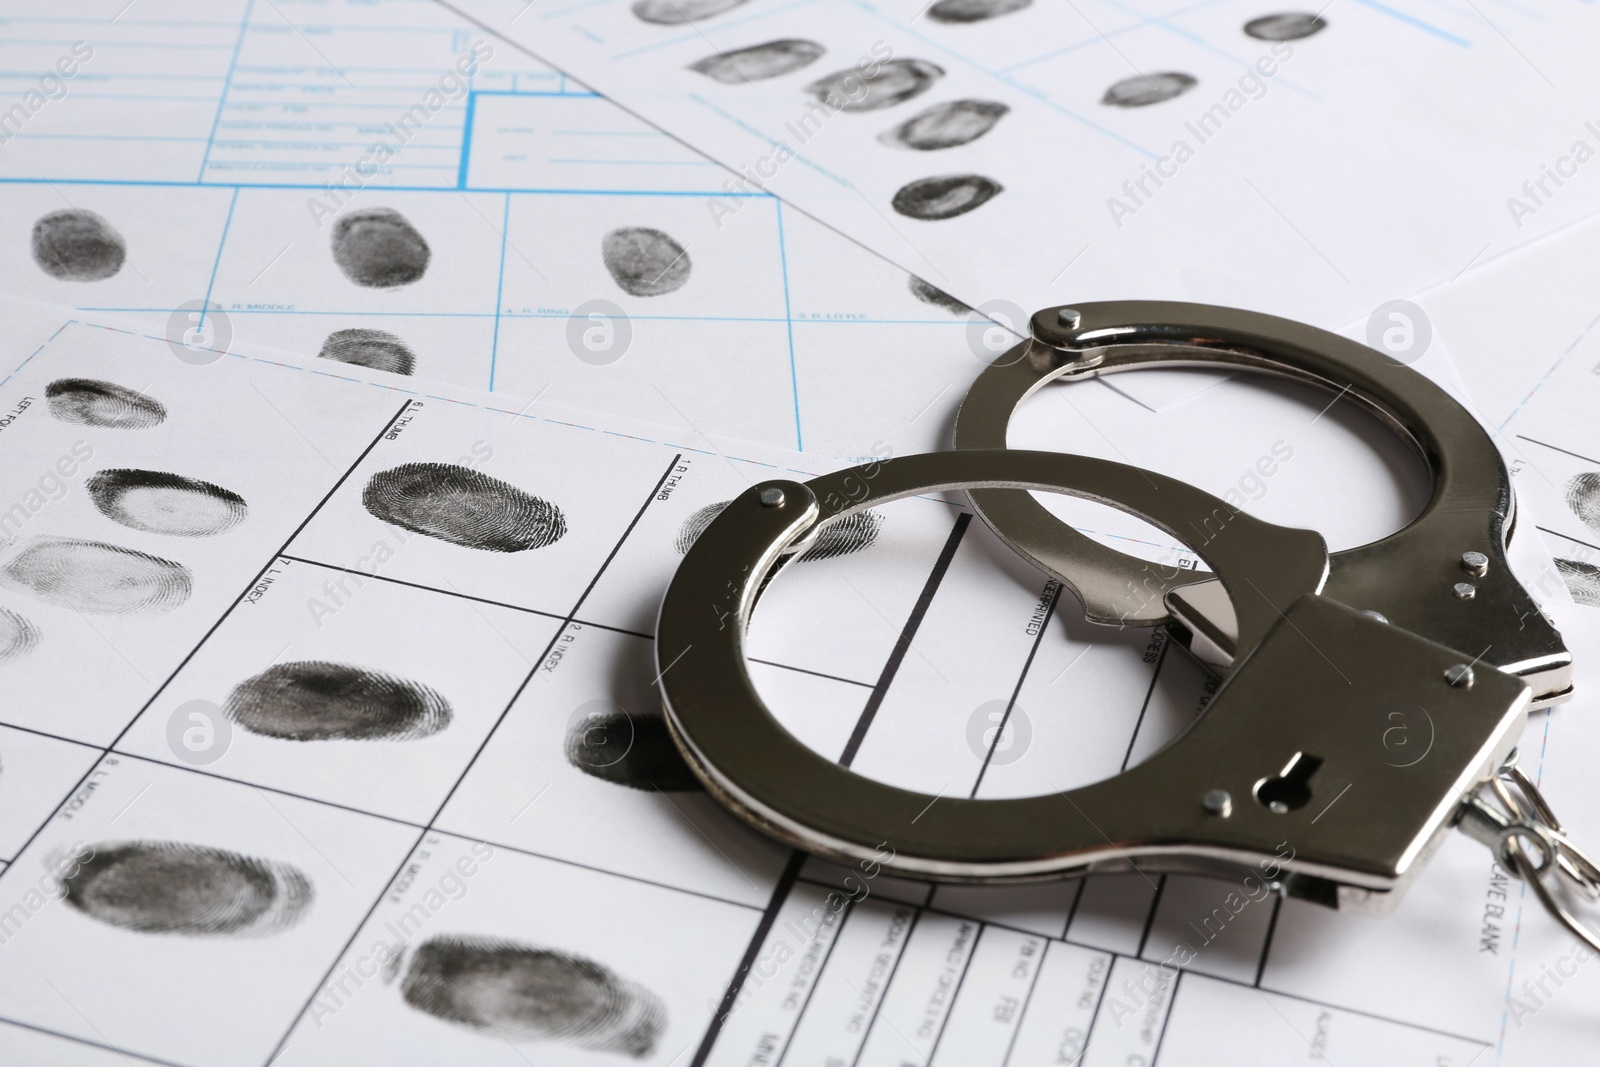 Photo of Handcuffs and fingerprint record sheets, closeup. Criminal investigation